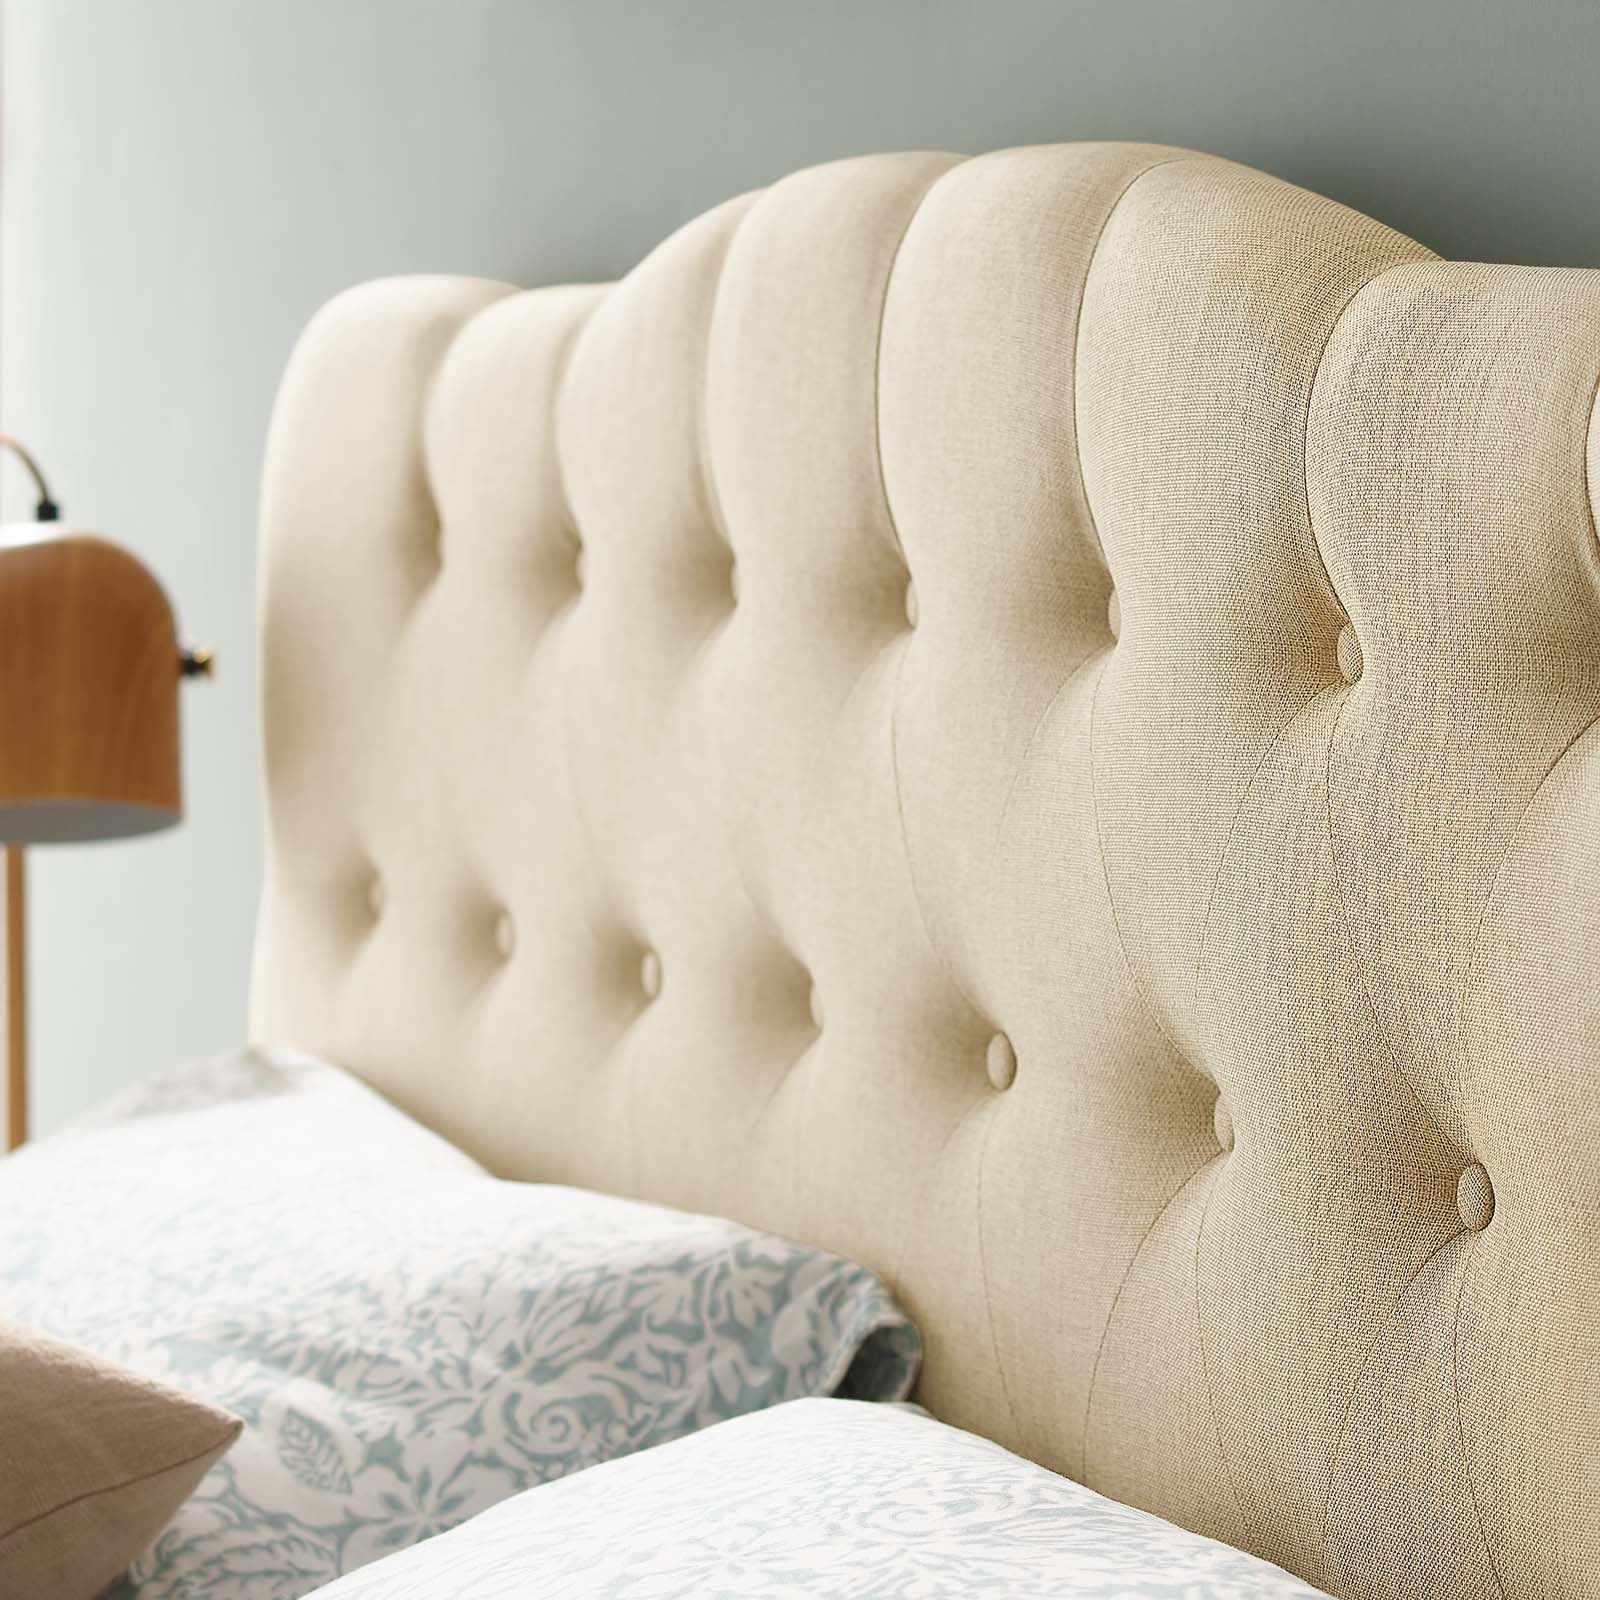 Annabel Full Upholstered Fabric Headboard - East Shore Modern Home Furnishings